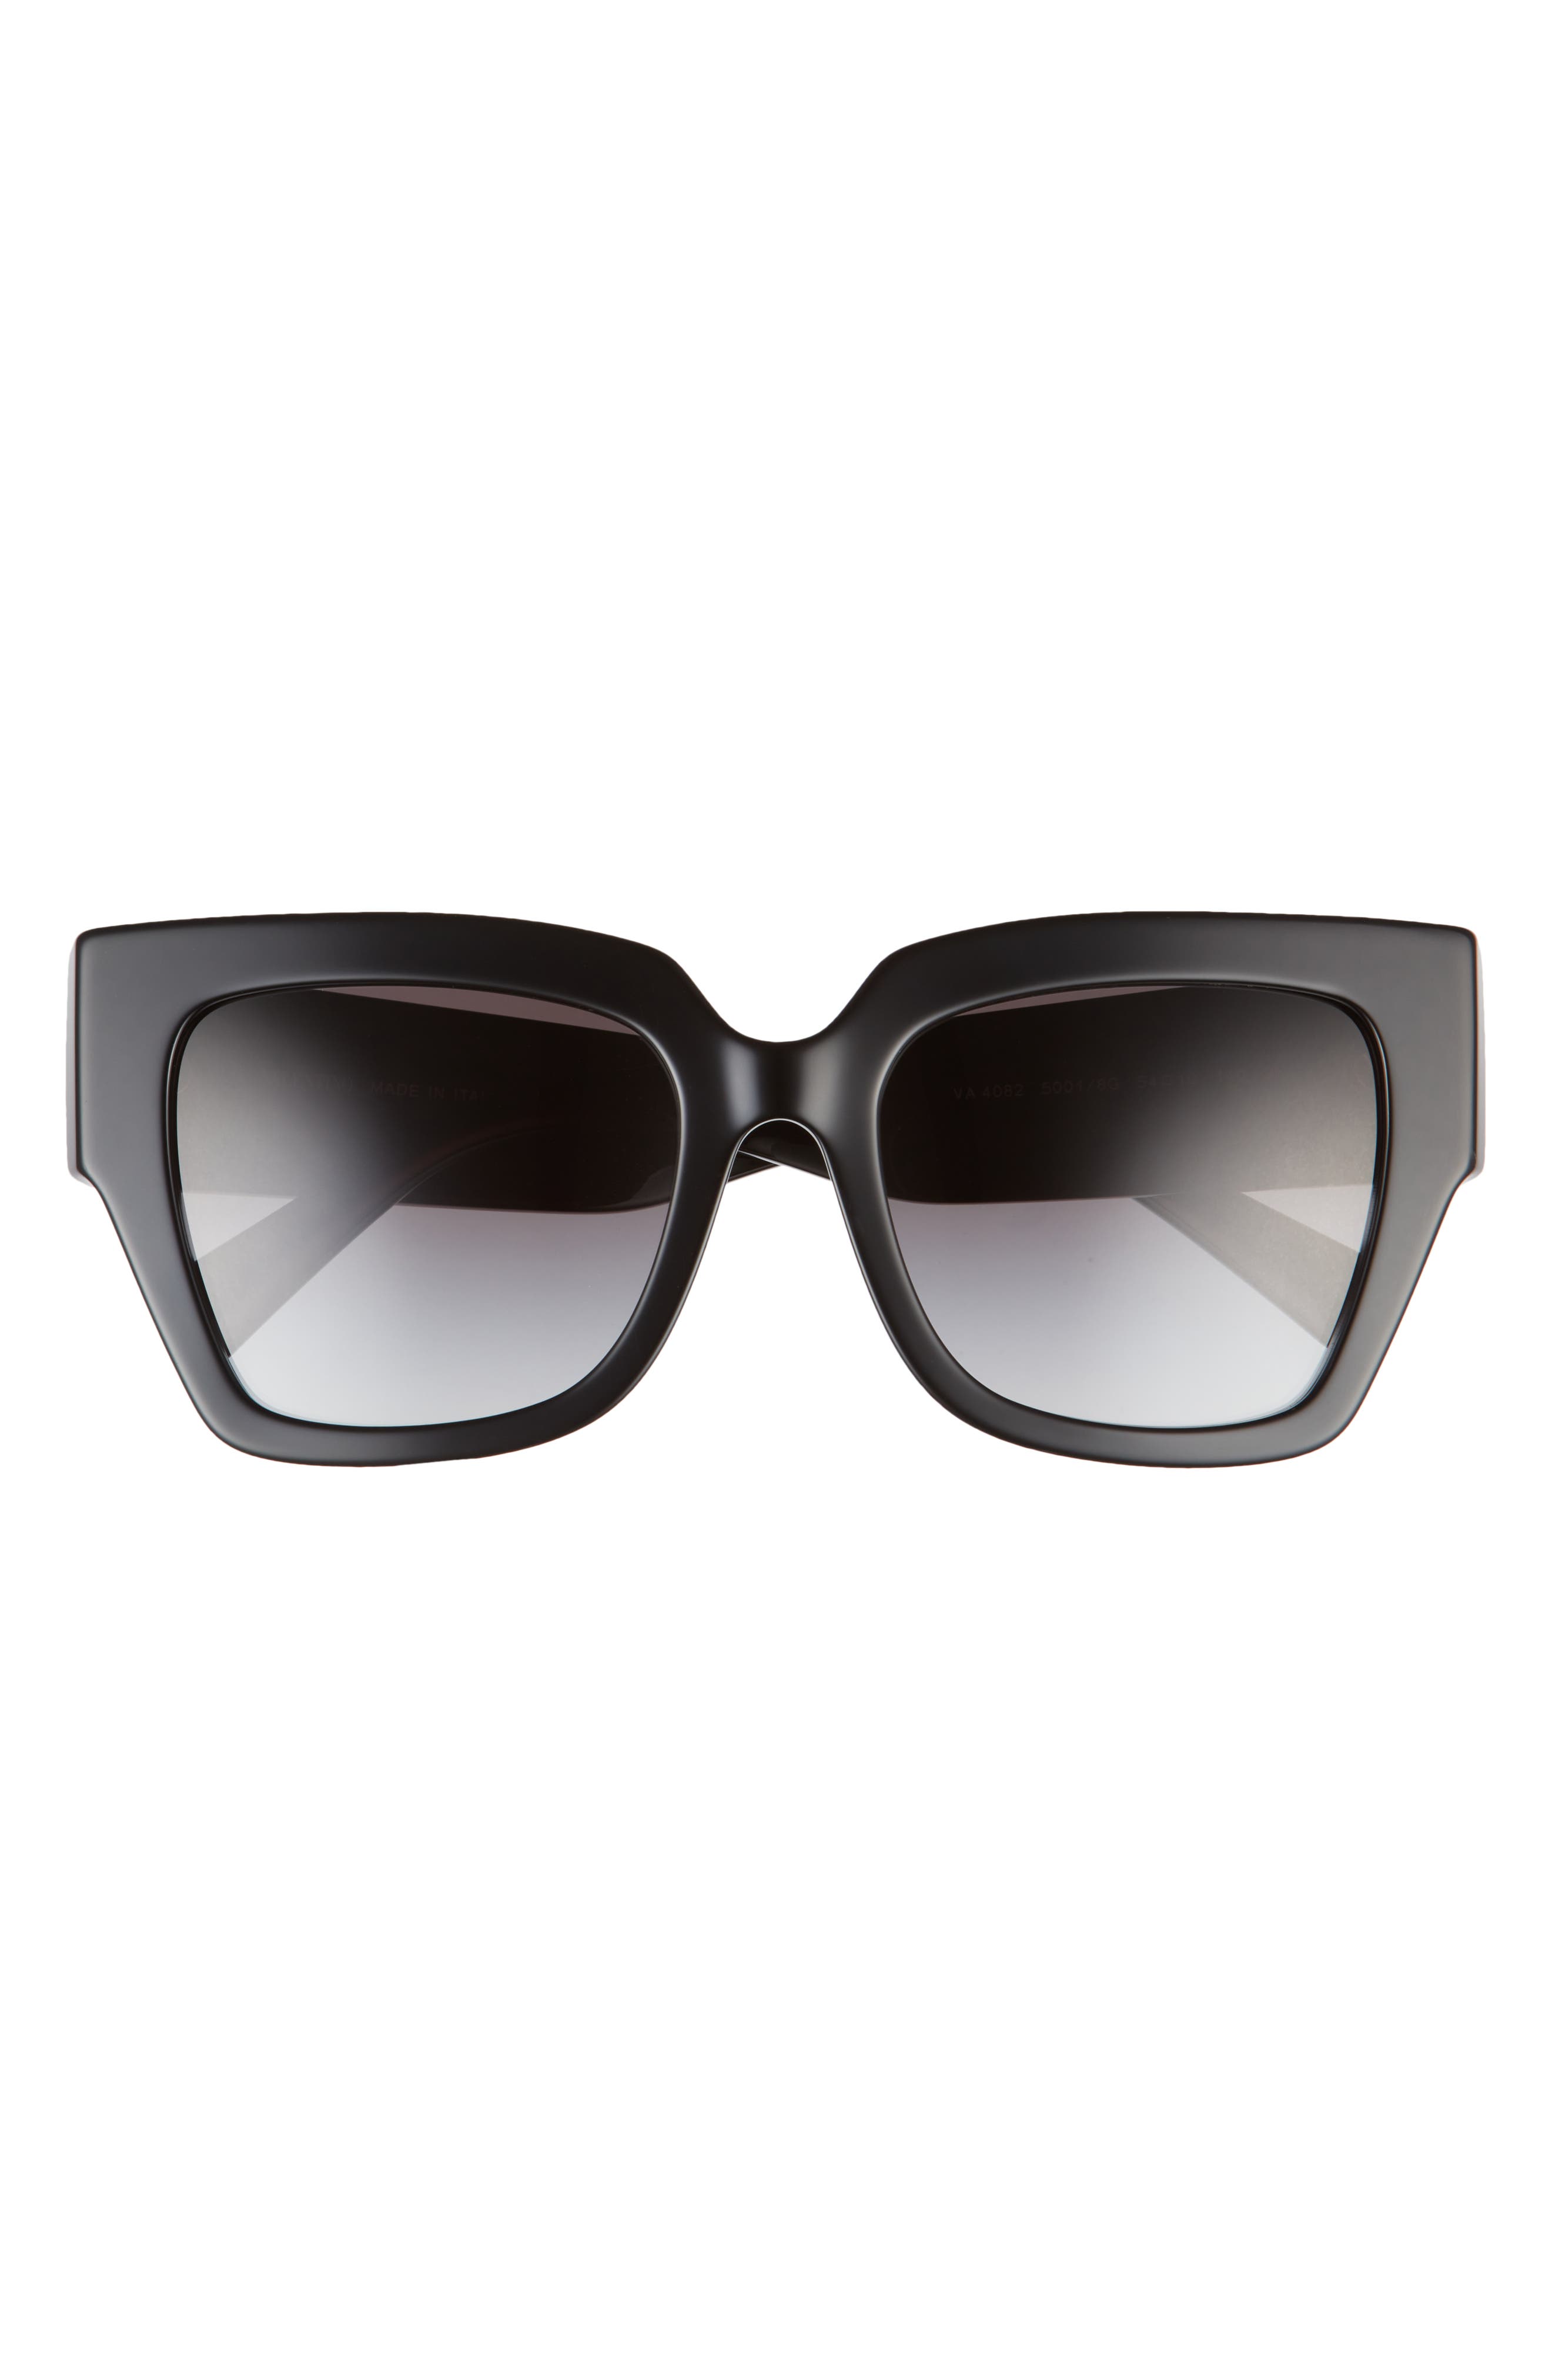 Valentino 54mm Square Sunglasses in Black/Gradient Black at Nordstrom